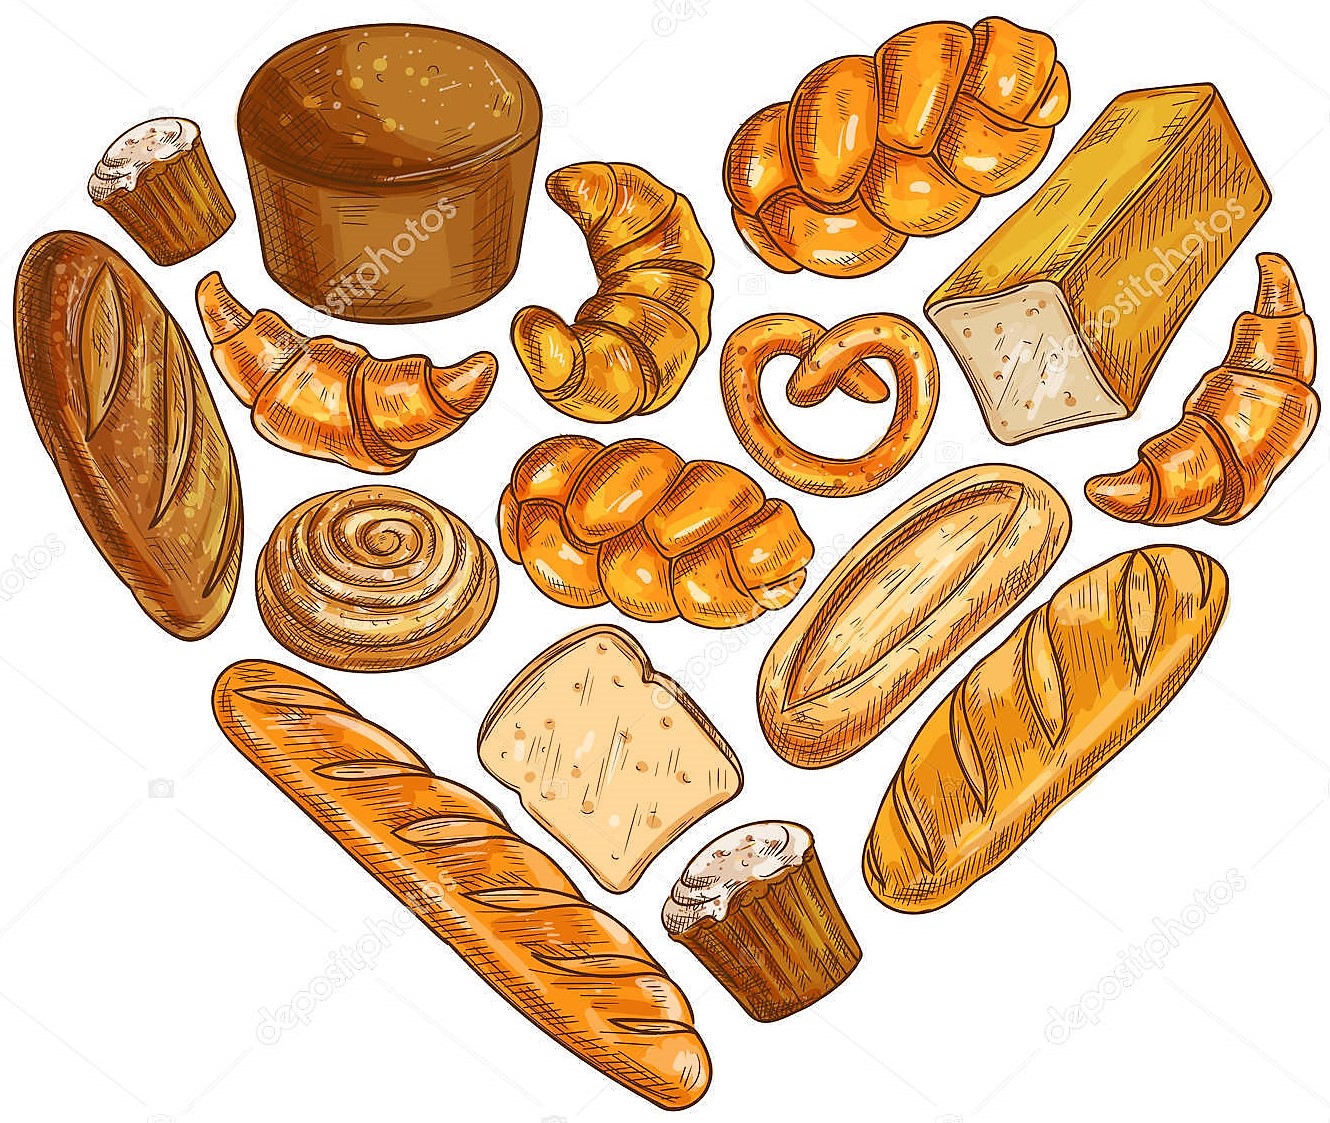 depositphotos 138771580 stock illustration bakery bread poster in heart